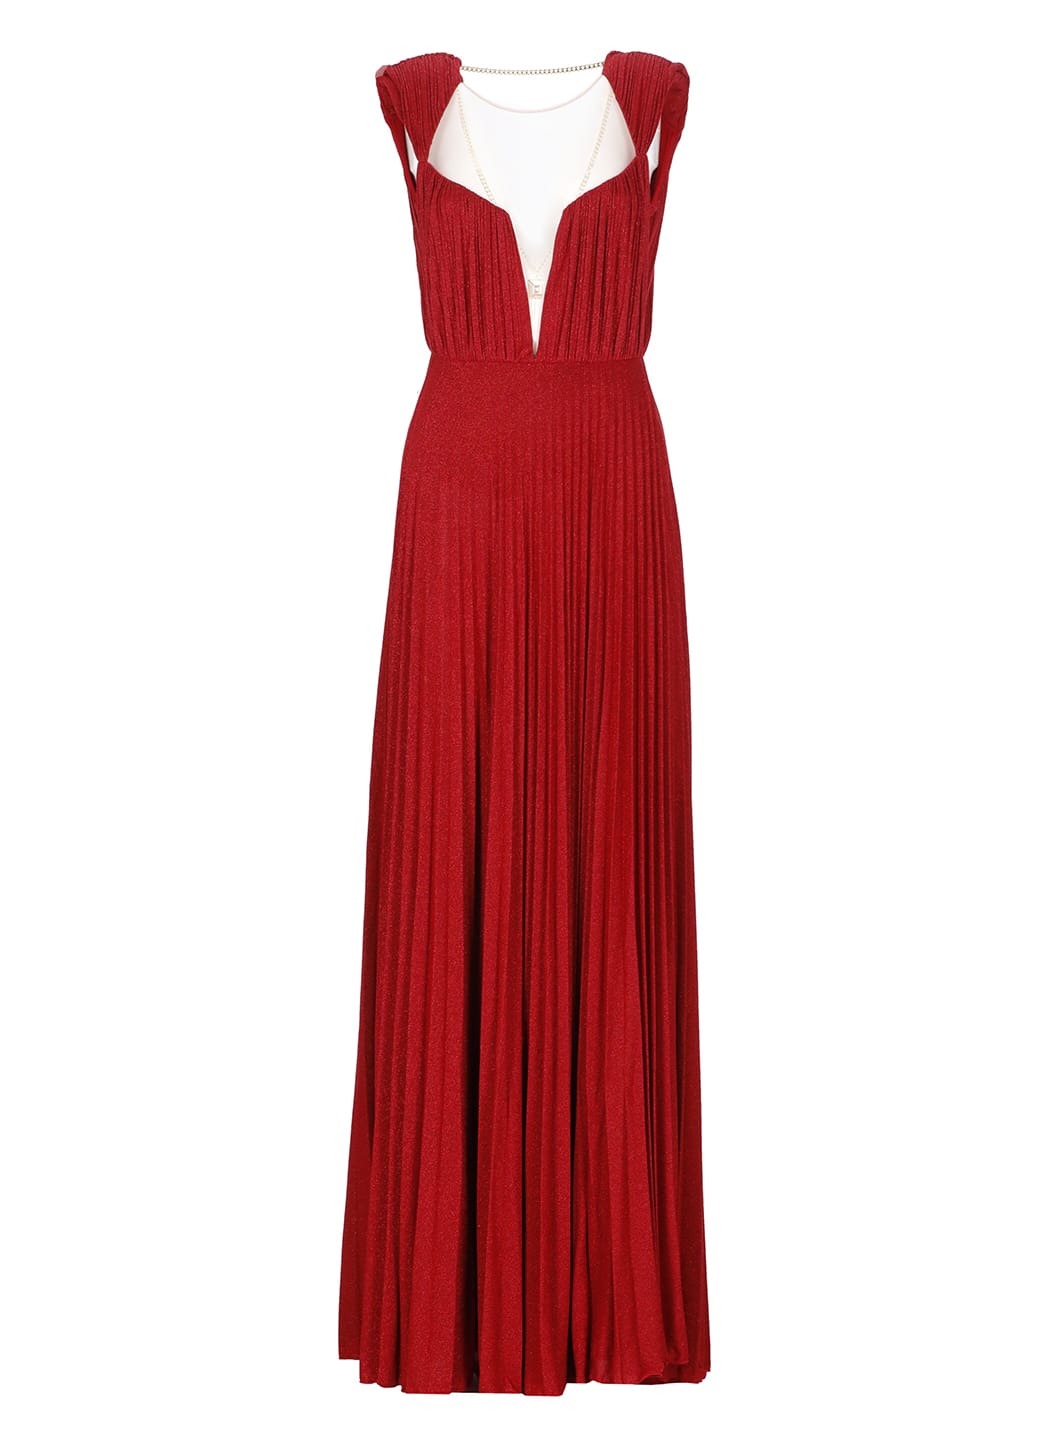 Elisabetta Franchi Pleated Red Carpet Dress